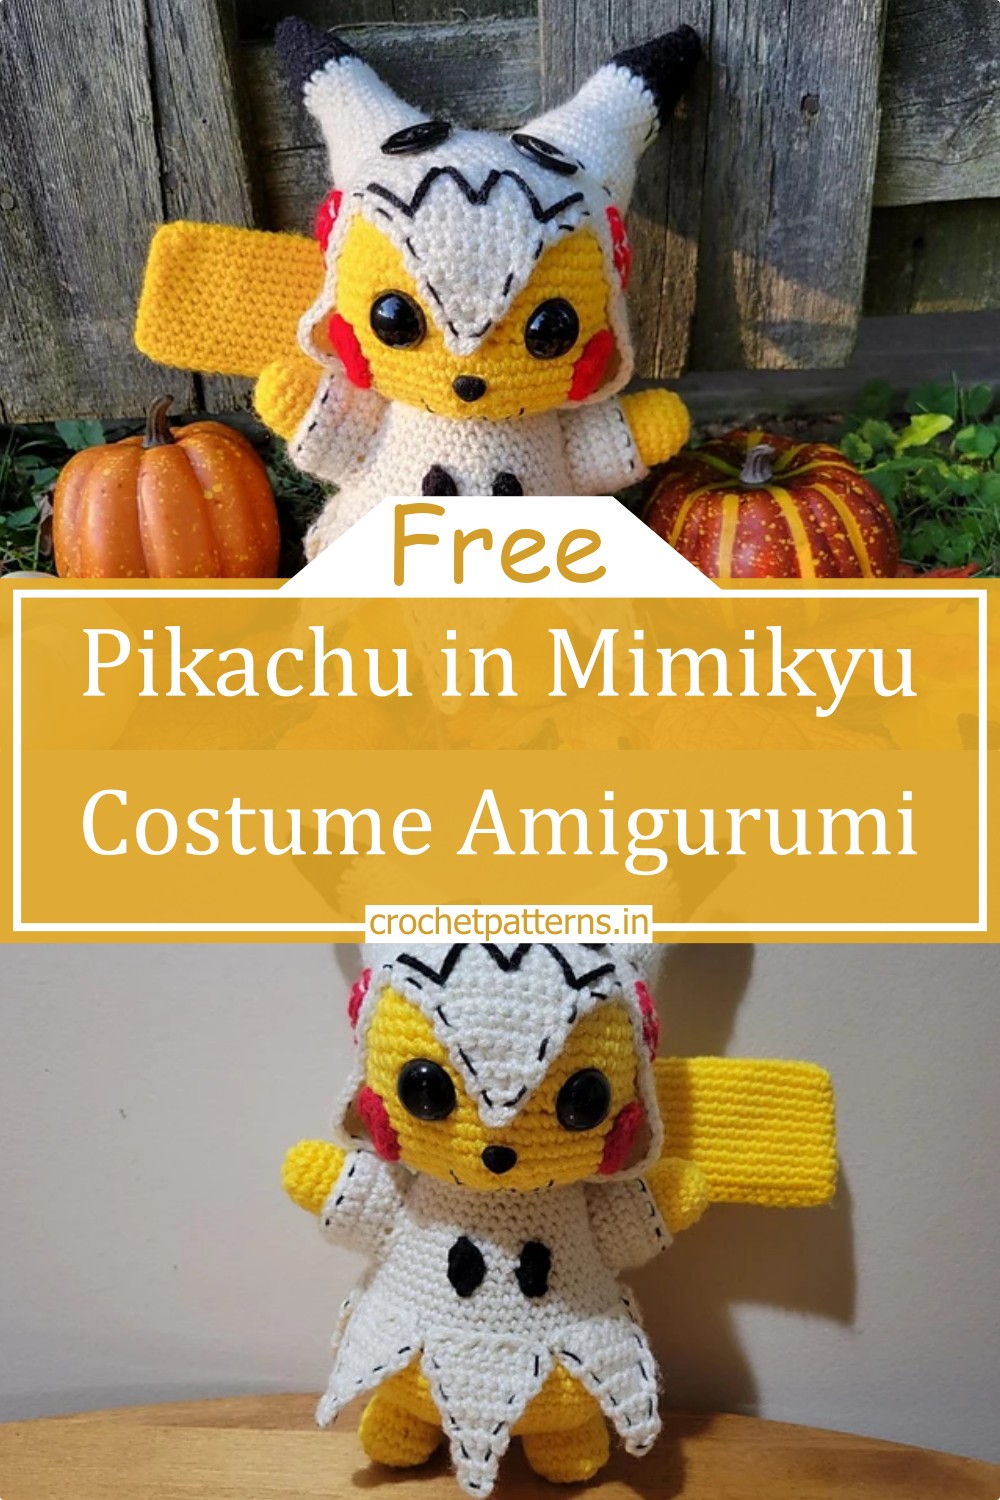 Pikachu in Mimikyu Costume Amigurumi